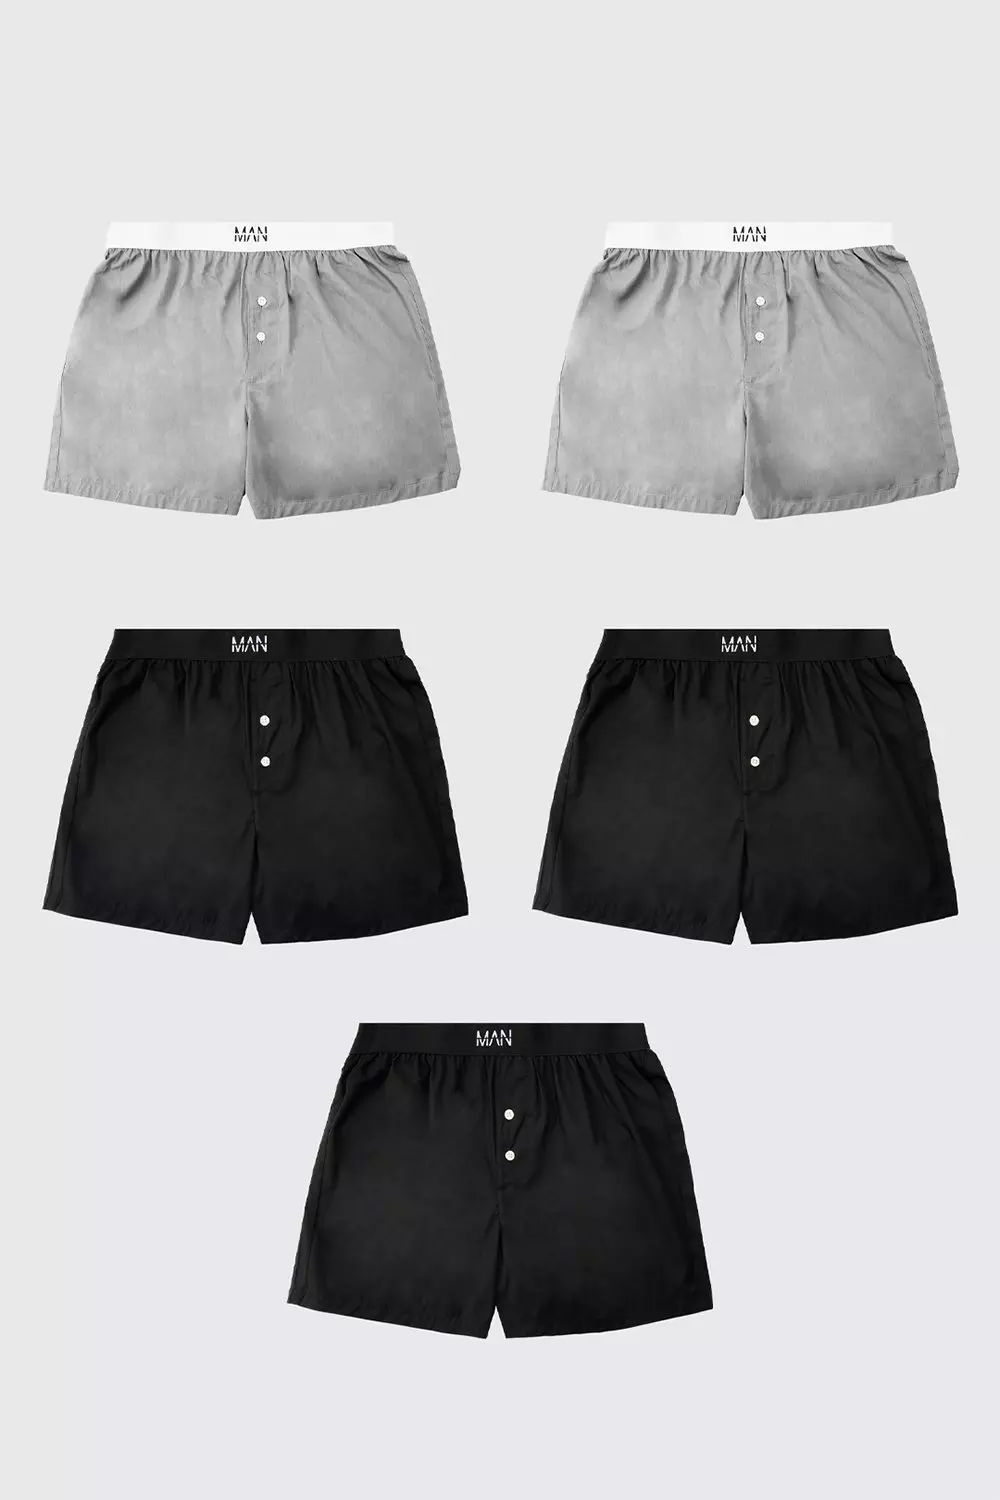 Multi 5 Pack Original Man Woven Boxer Shorts